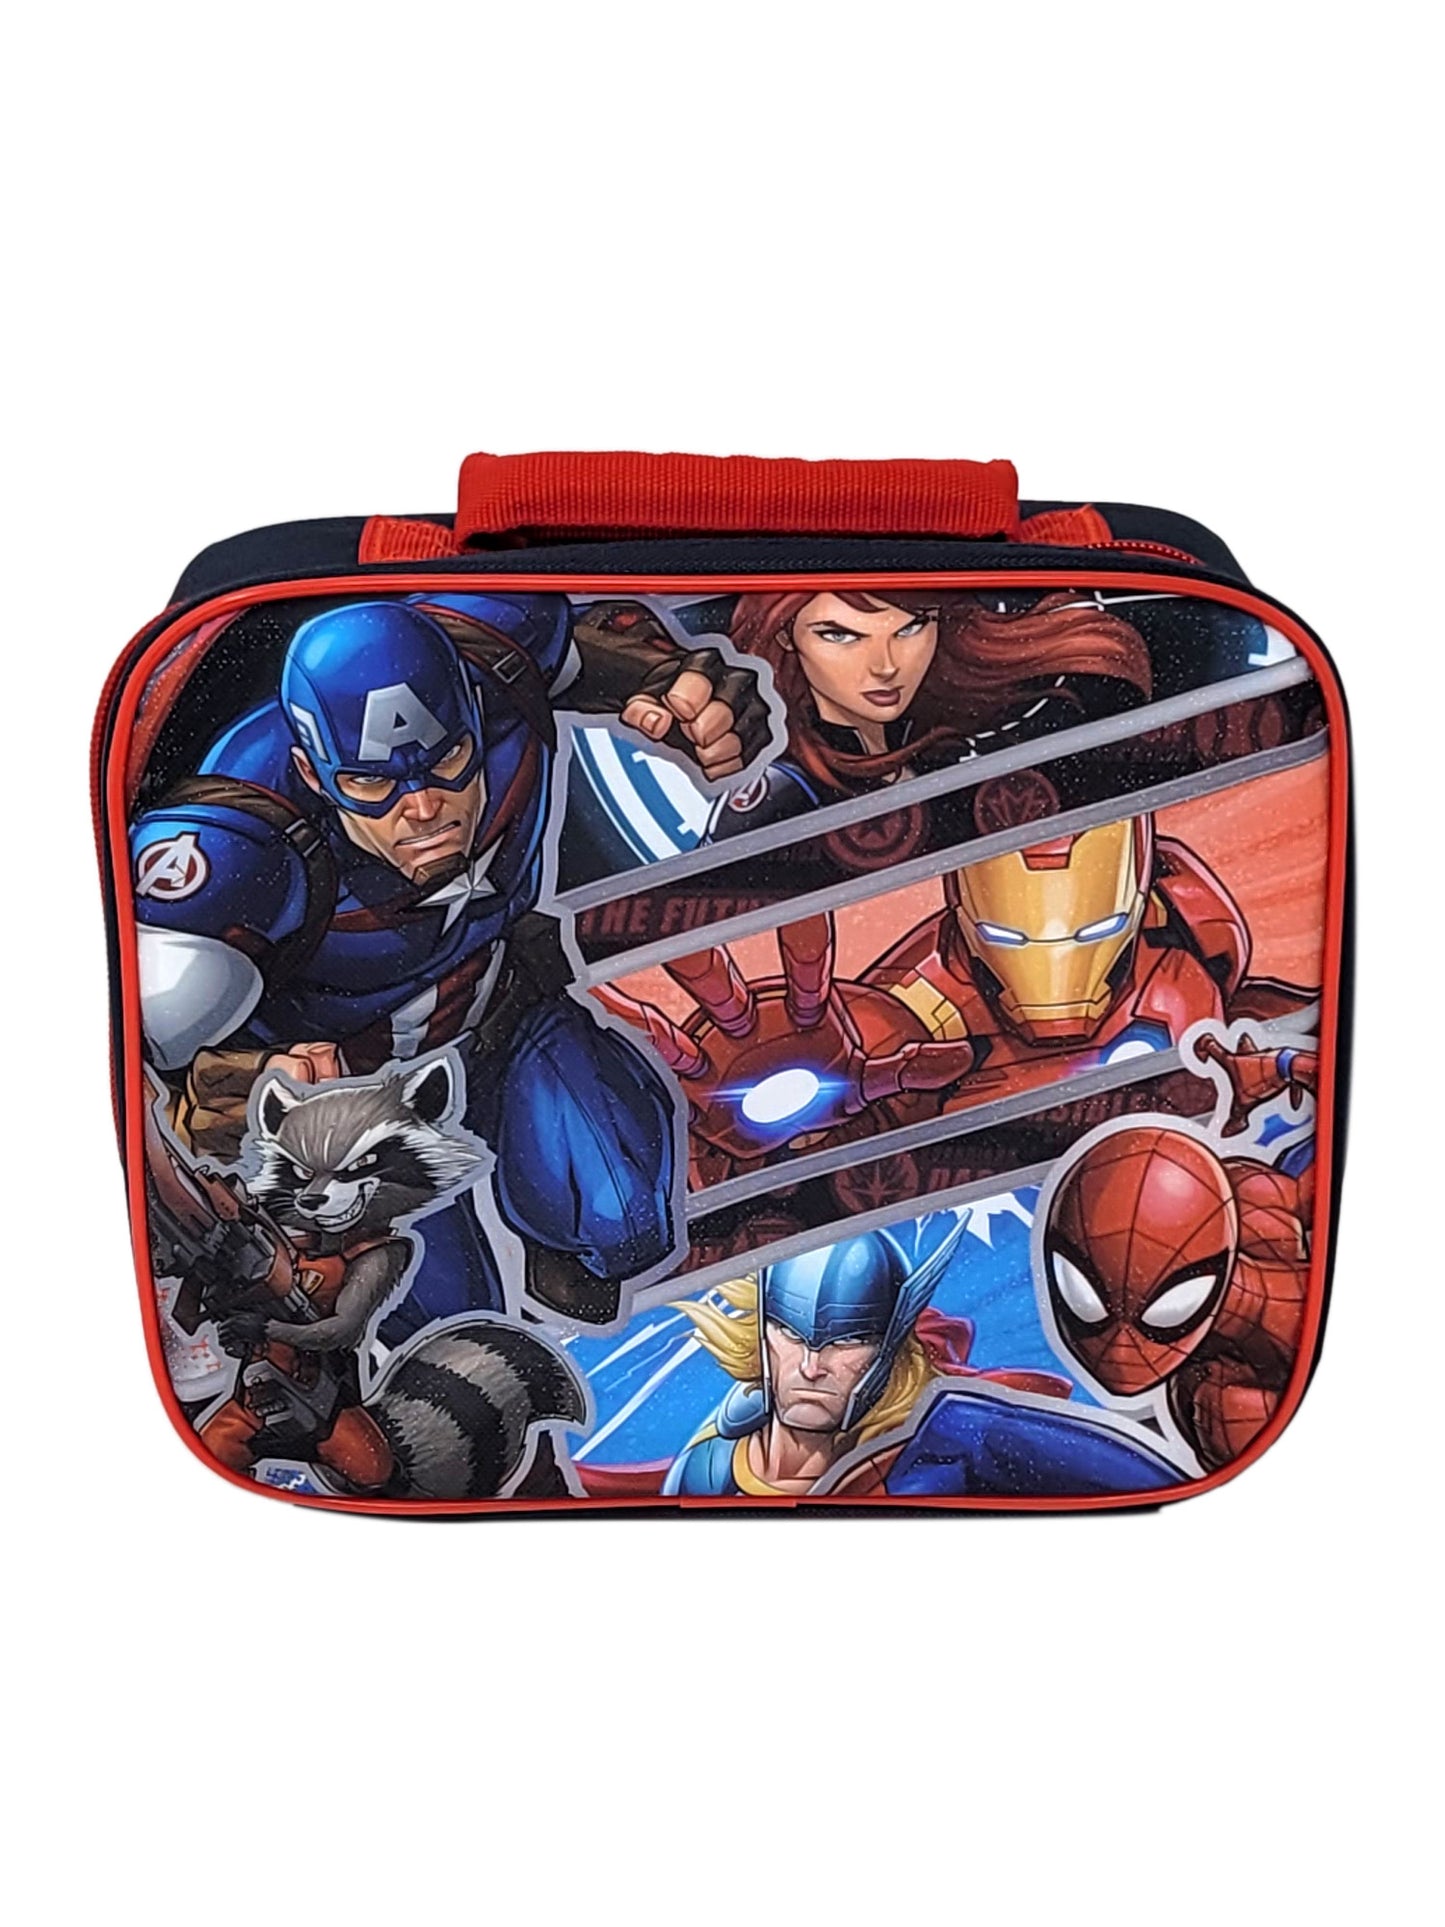 Avengers Spider-Man Lunch Bag Insulated Marvel Thor Rocket Raccoon Boys School